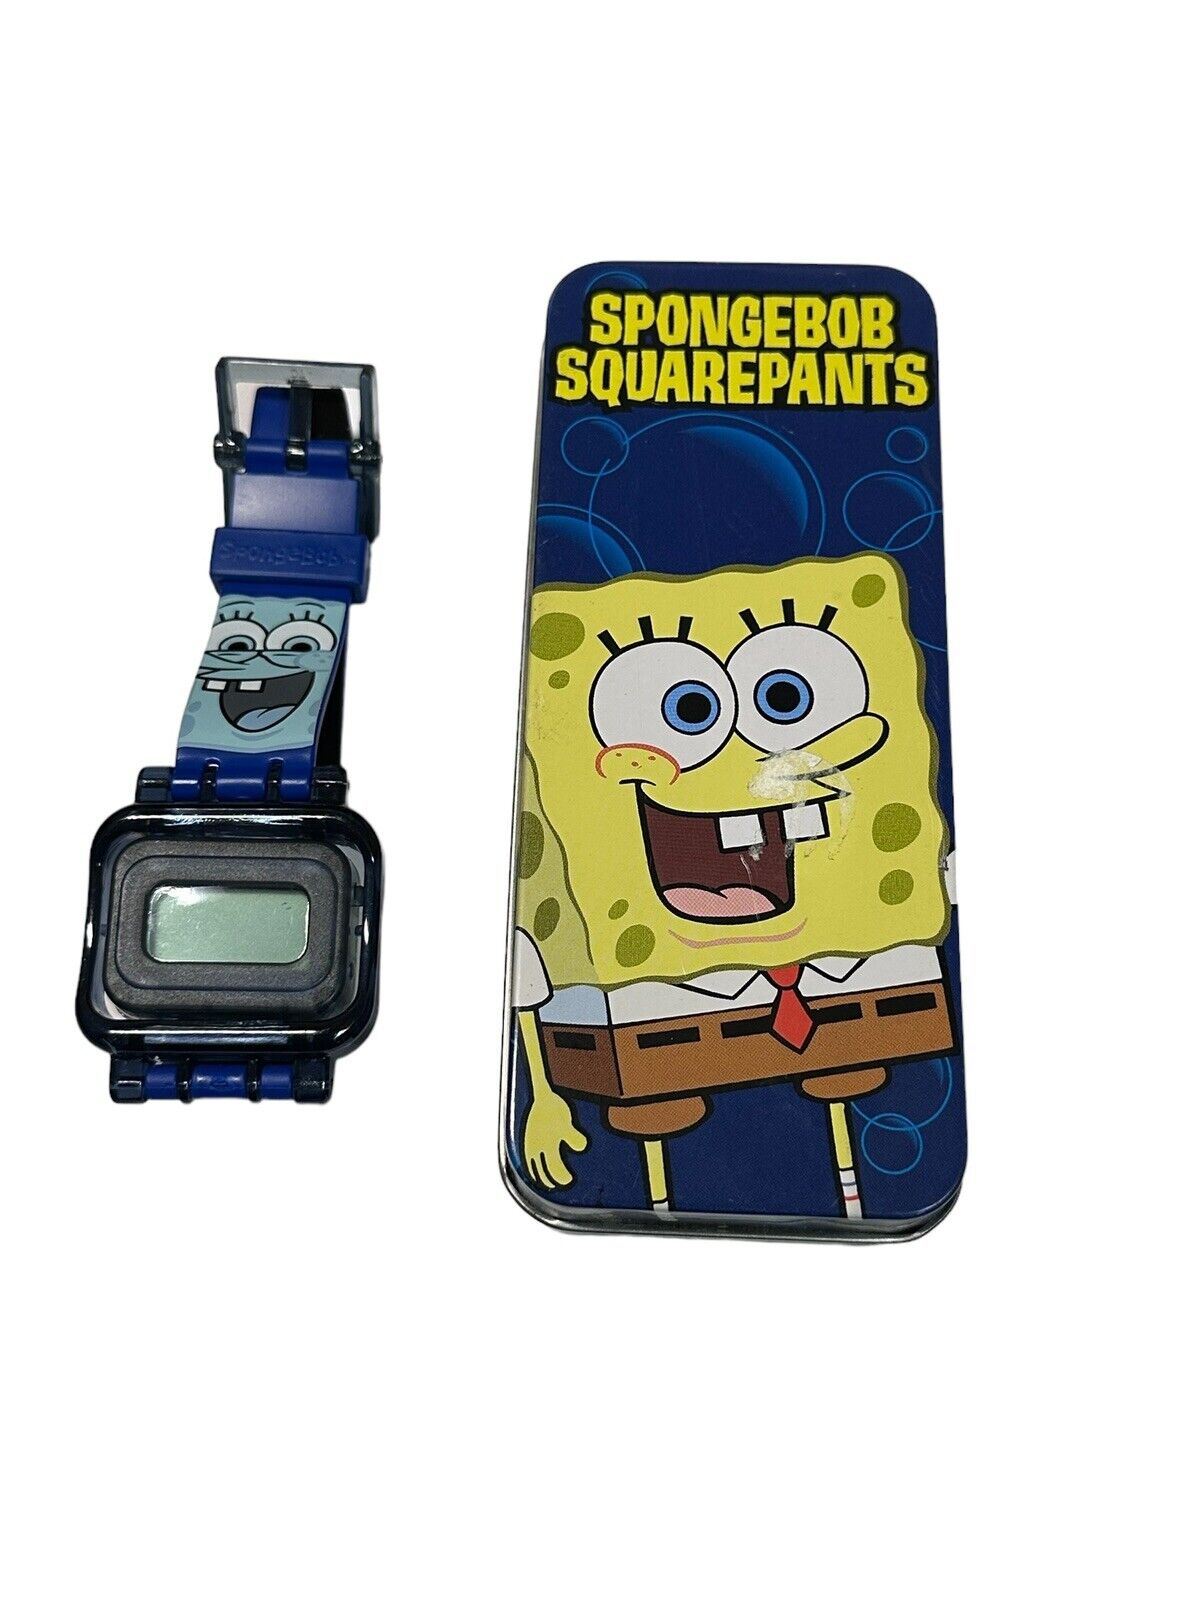 2004 VINTAGE  Burger King SpongeBob SquarePants Viacom digital watch collectible